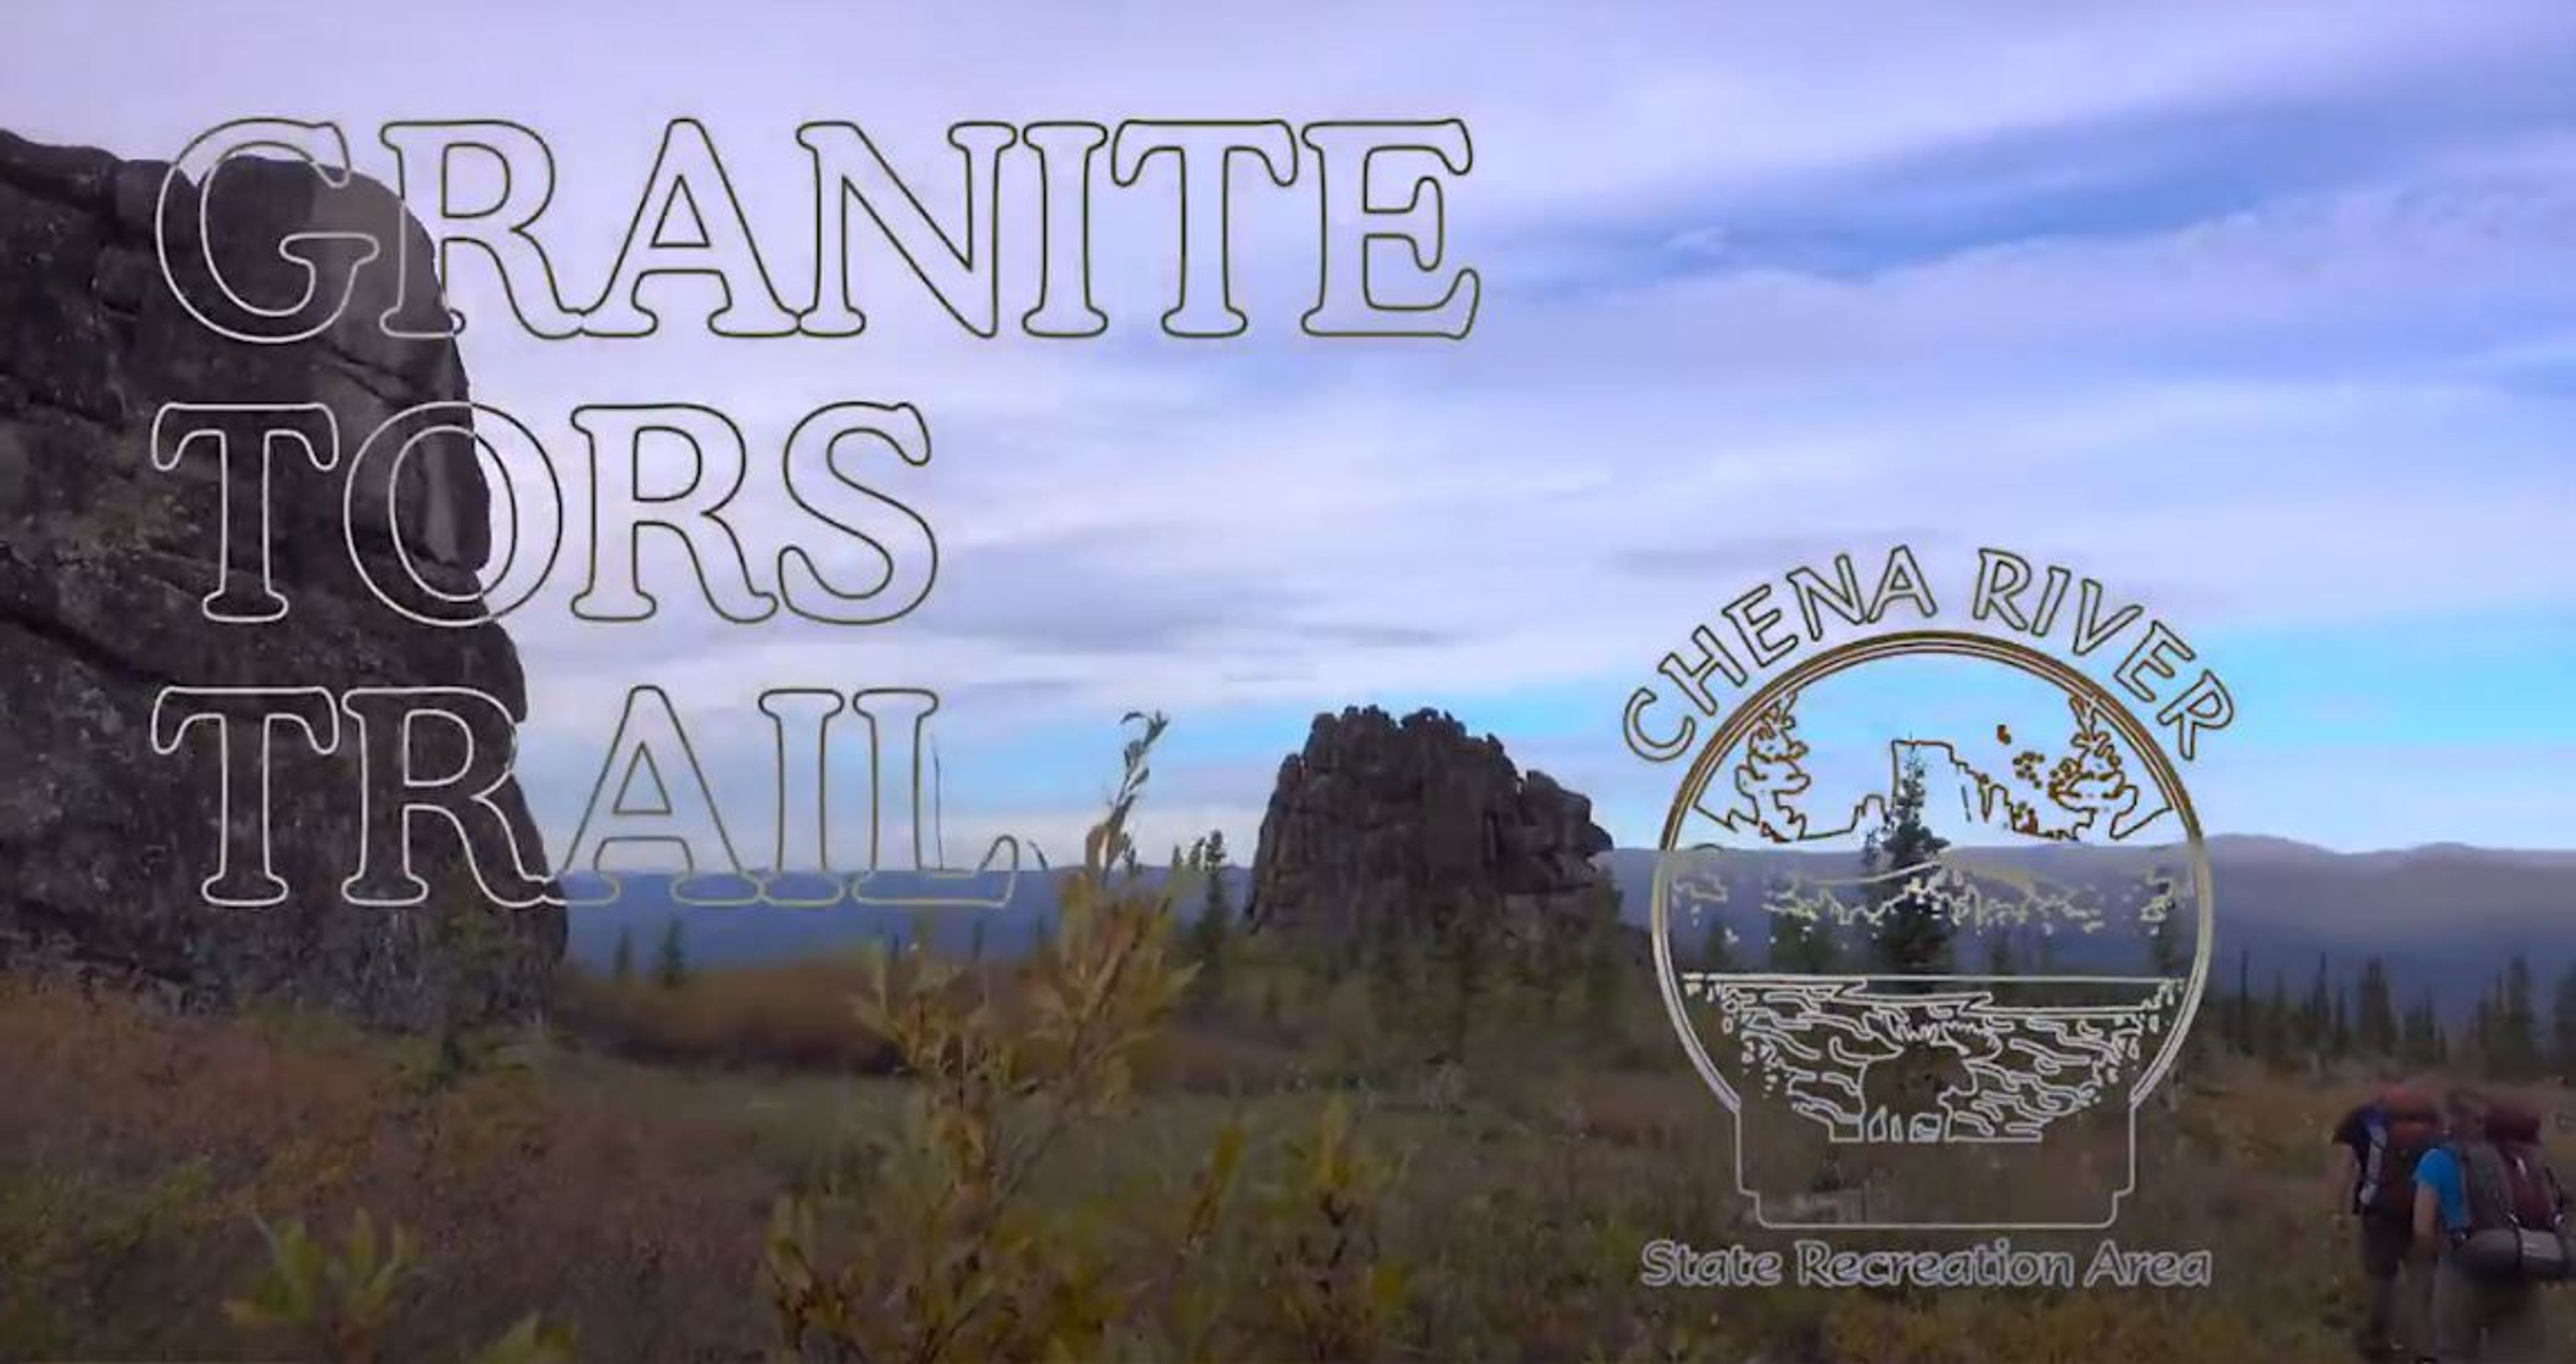 Granite Tors Trail